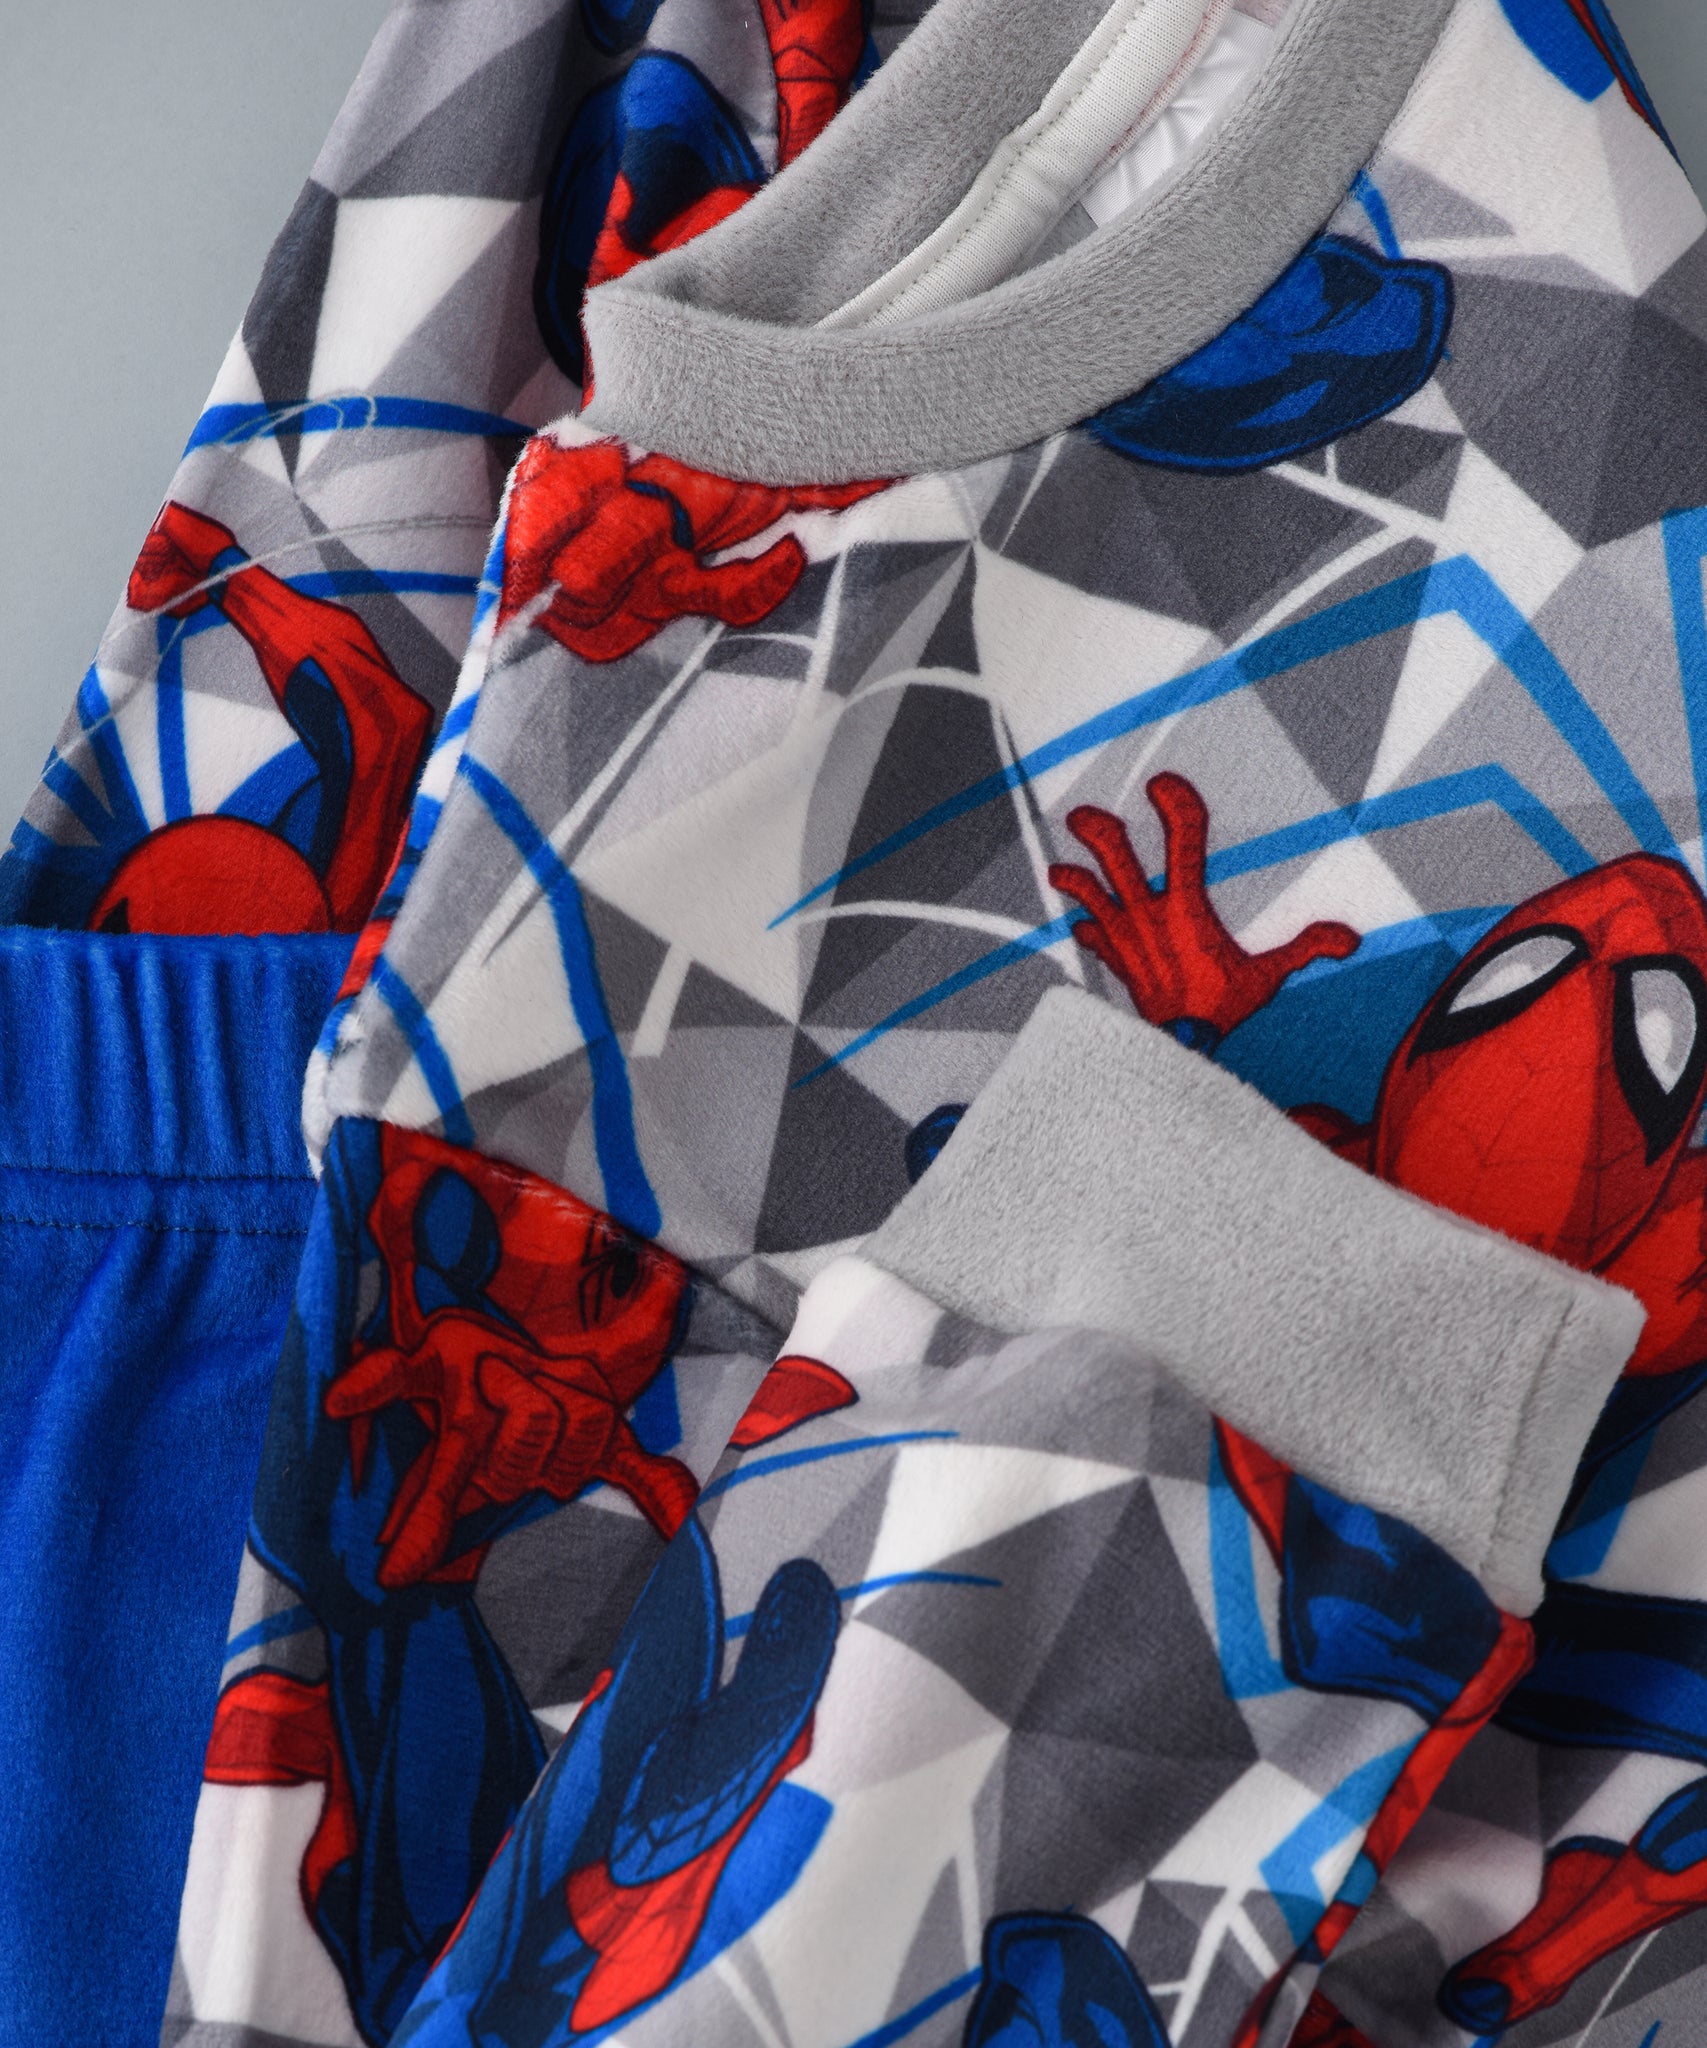 Spider-Man Junior Boys Fleece Pyjama Set